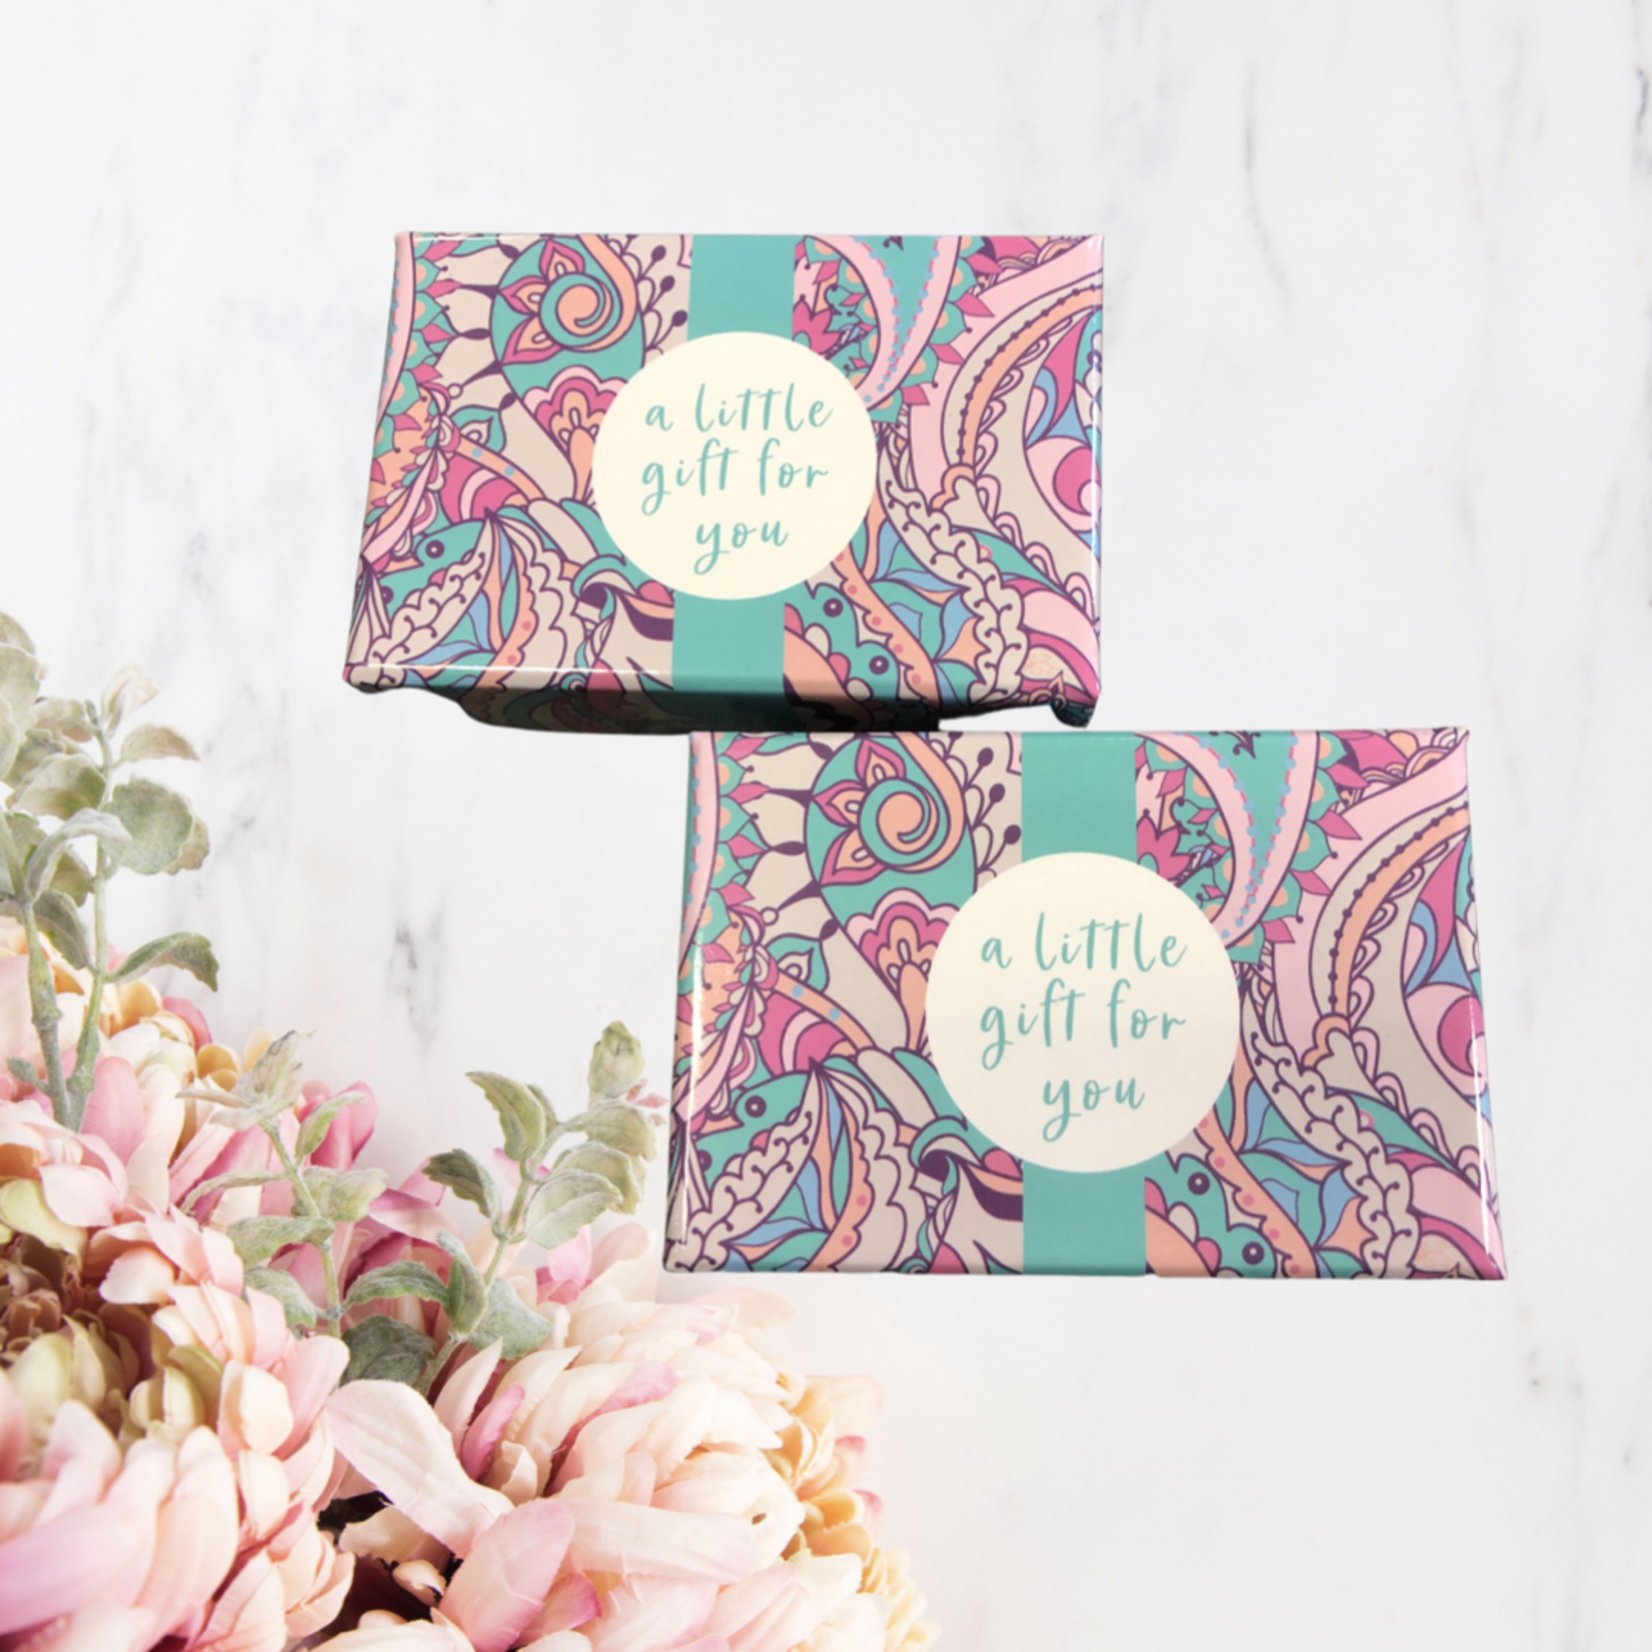 La Vida A Little Gift for You - Pink Paisley Boxed Soap